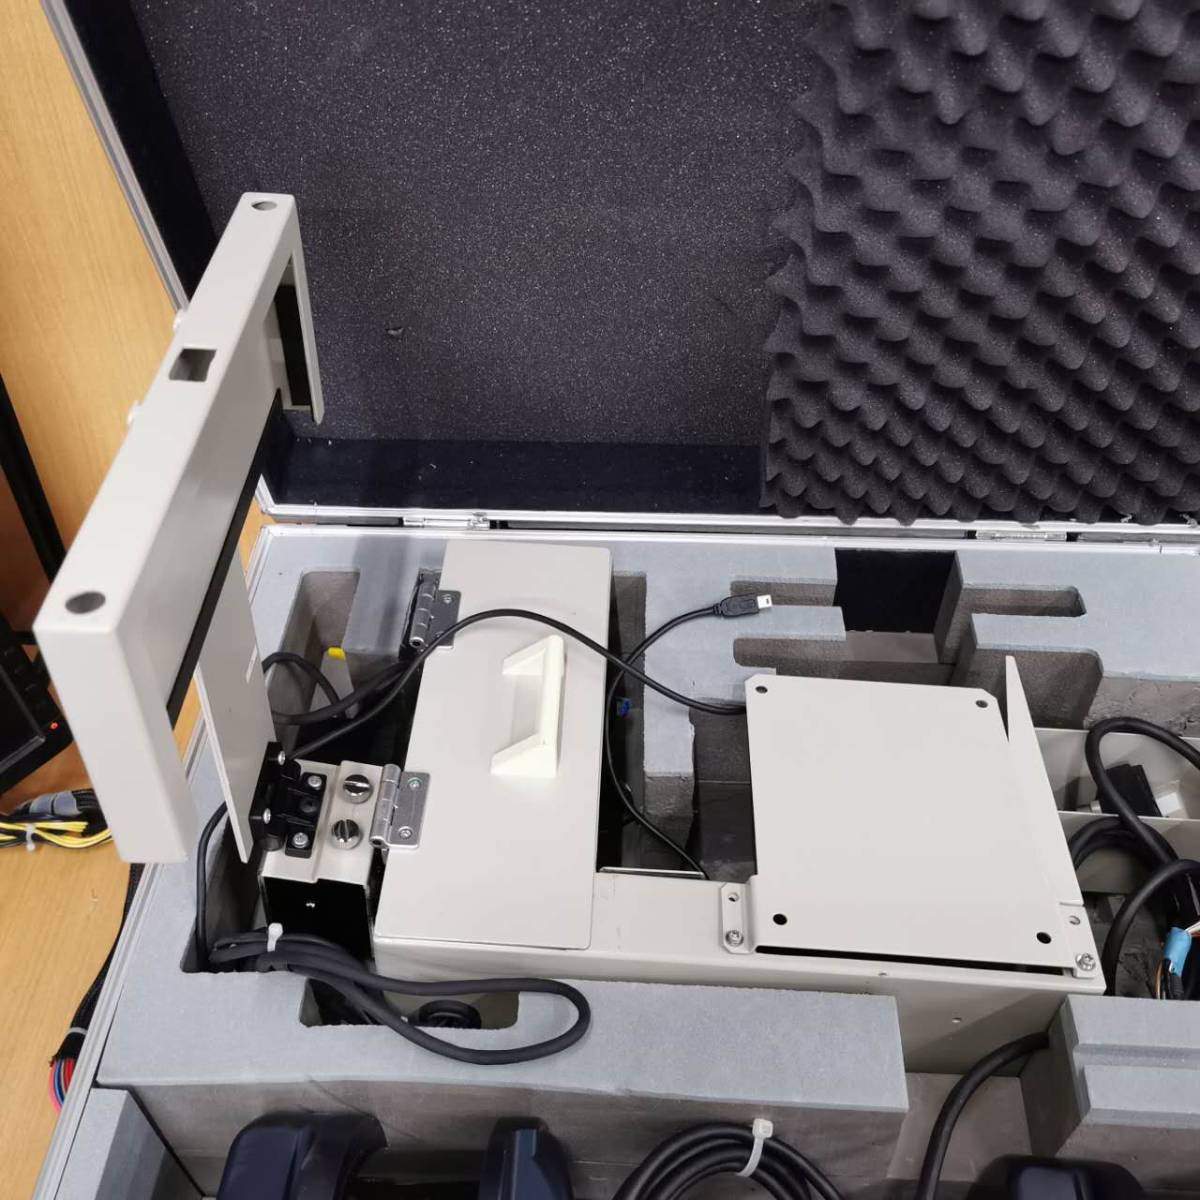 HOKUYO north . sensor scanner type UXM-30LXH-EWA01 set box equipped outdoors for laser scanner (LiDAR)